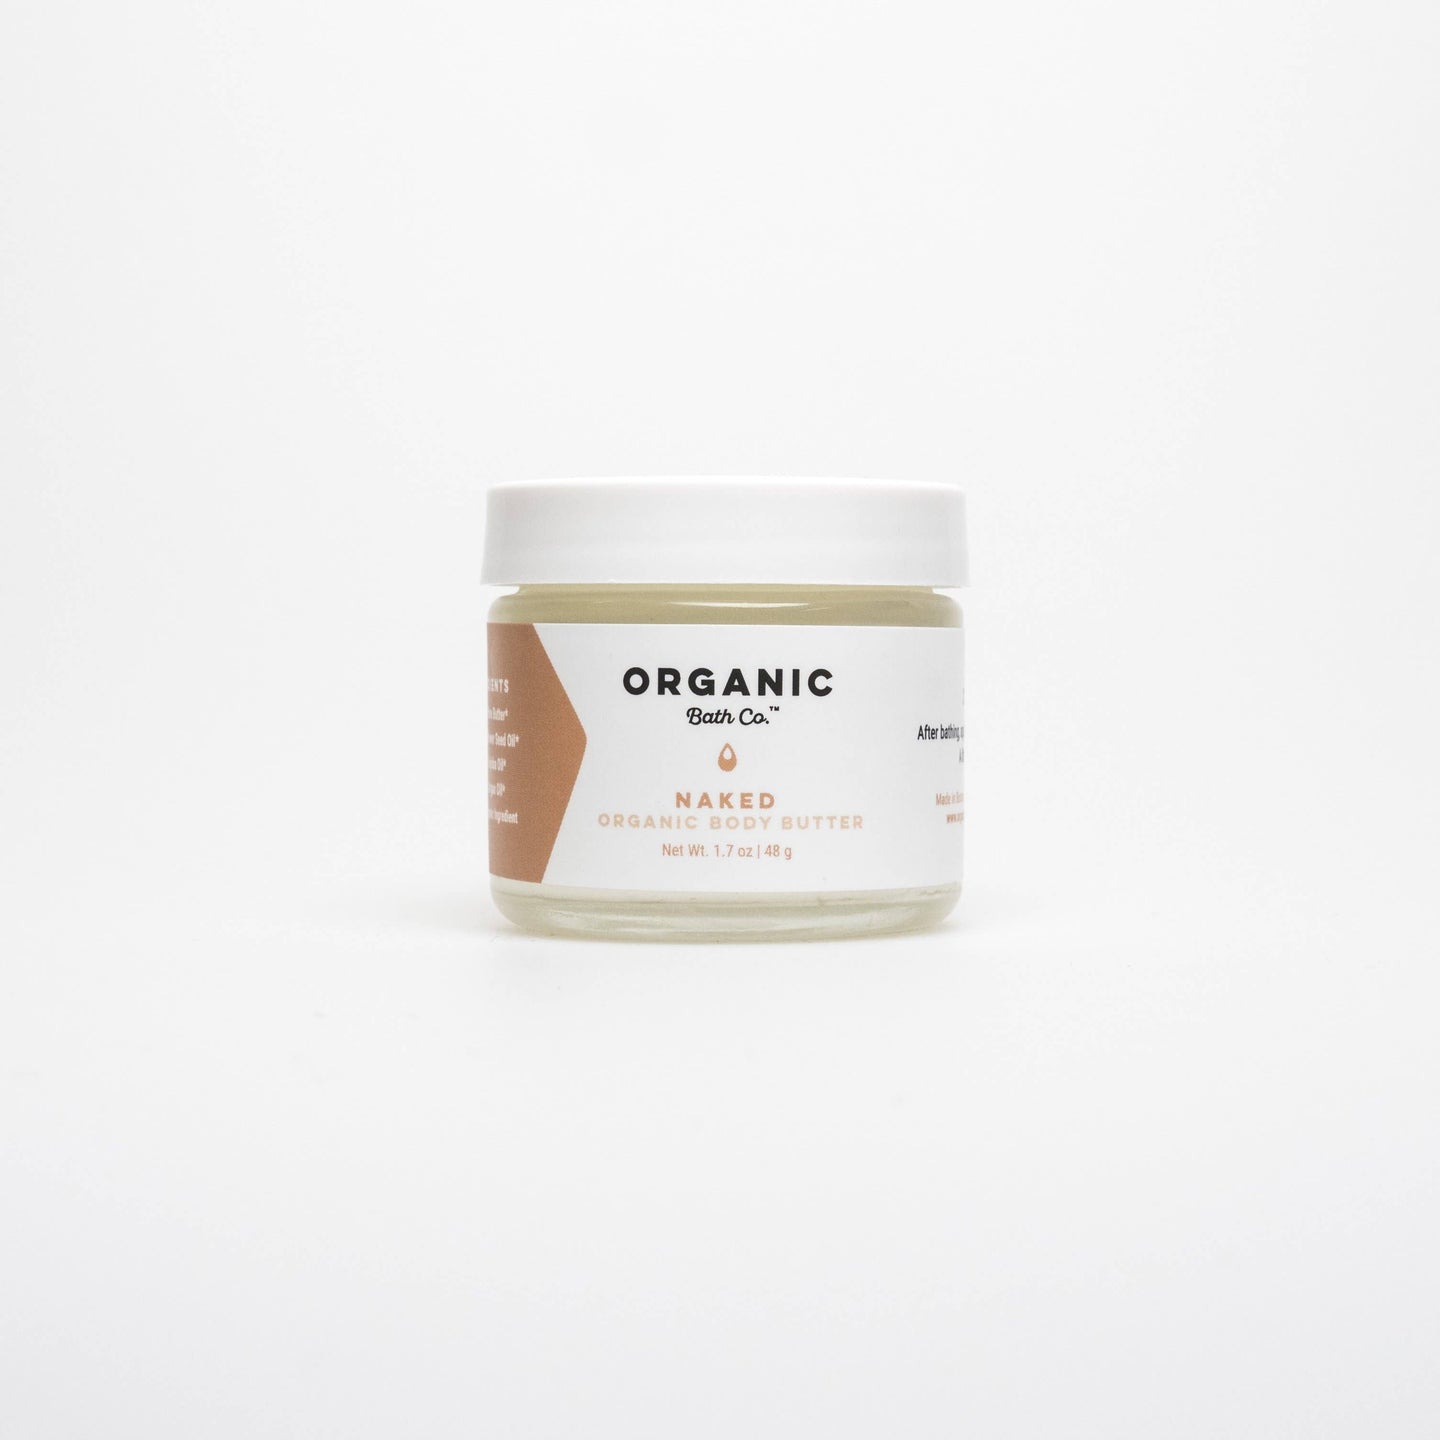 Organic Bath Co. - Naked Organic Body Butter